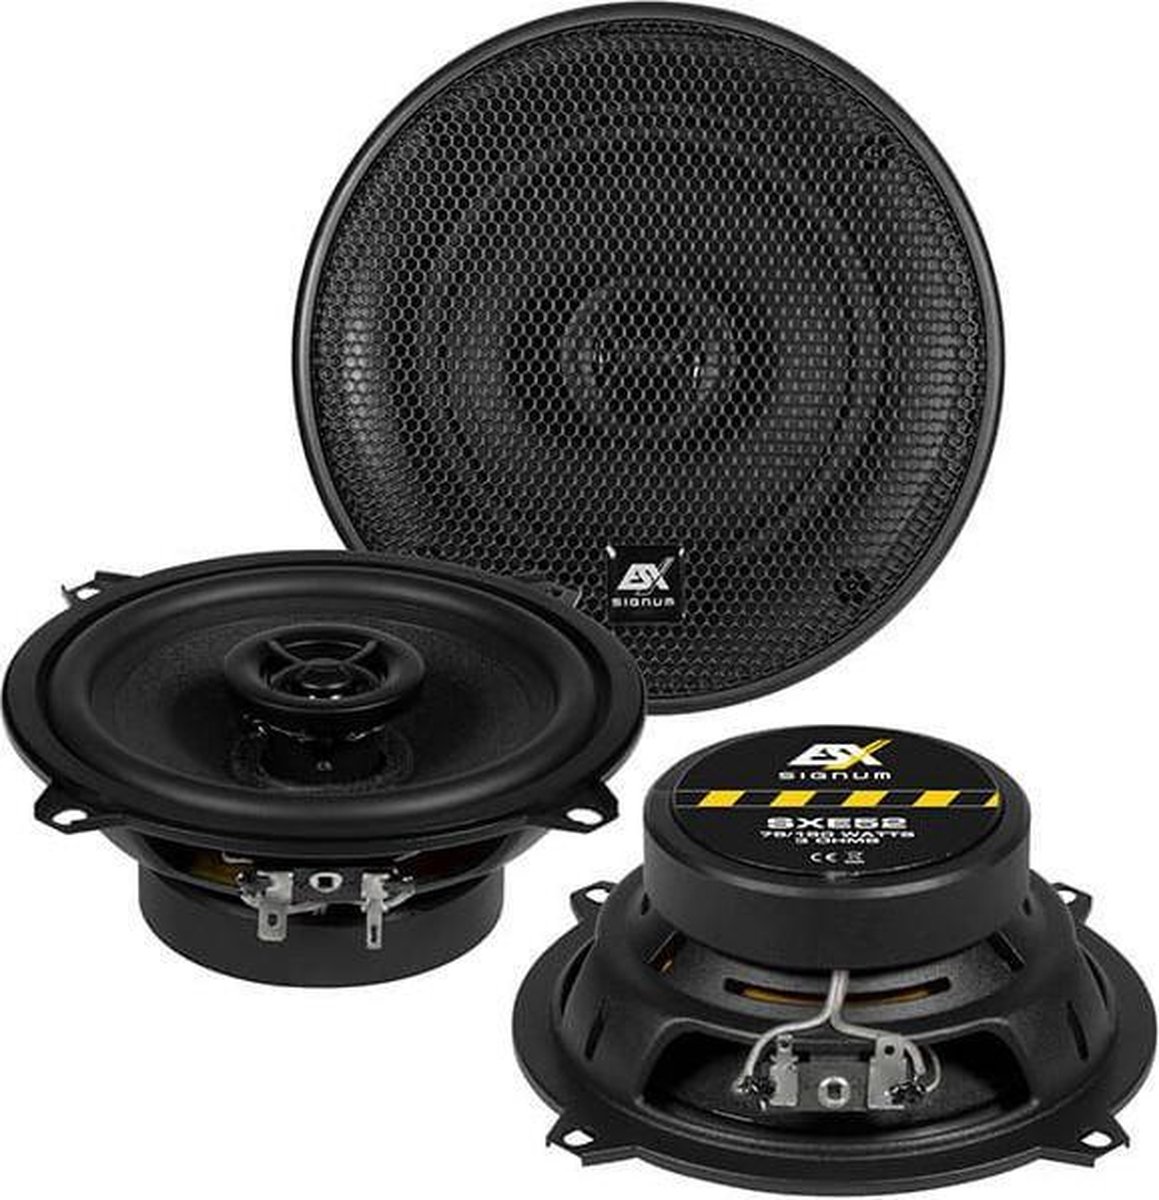 ESX SXE52 13cm coax-speaker flat speakers